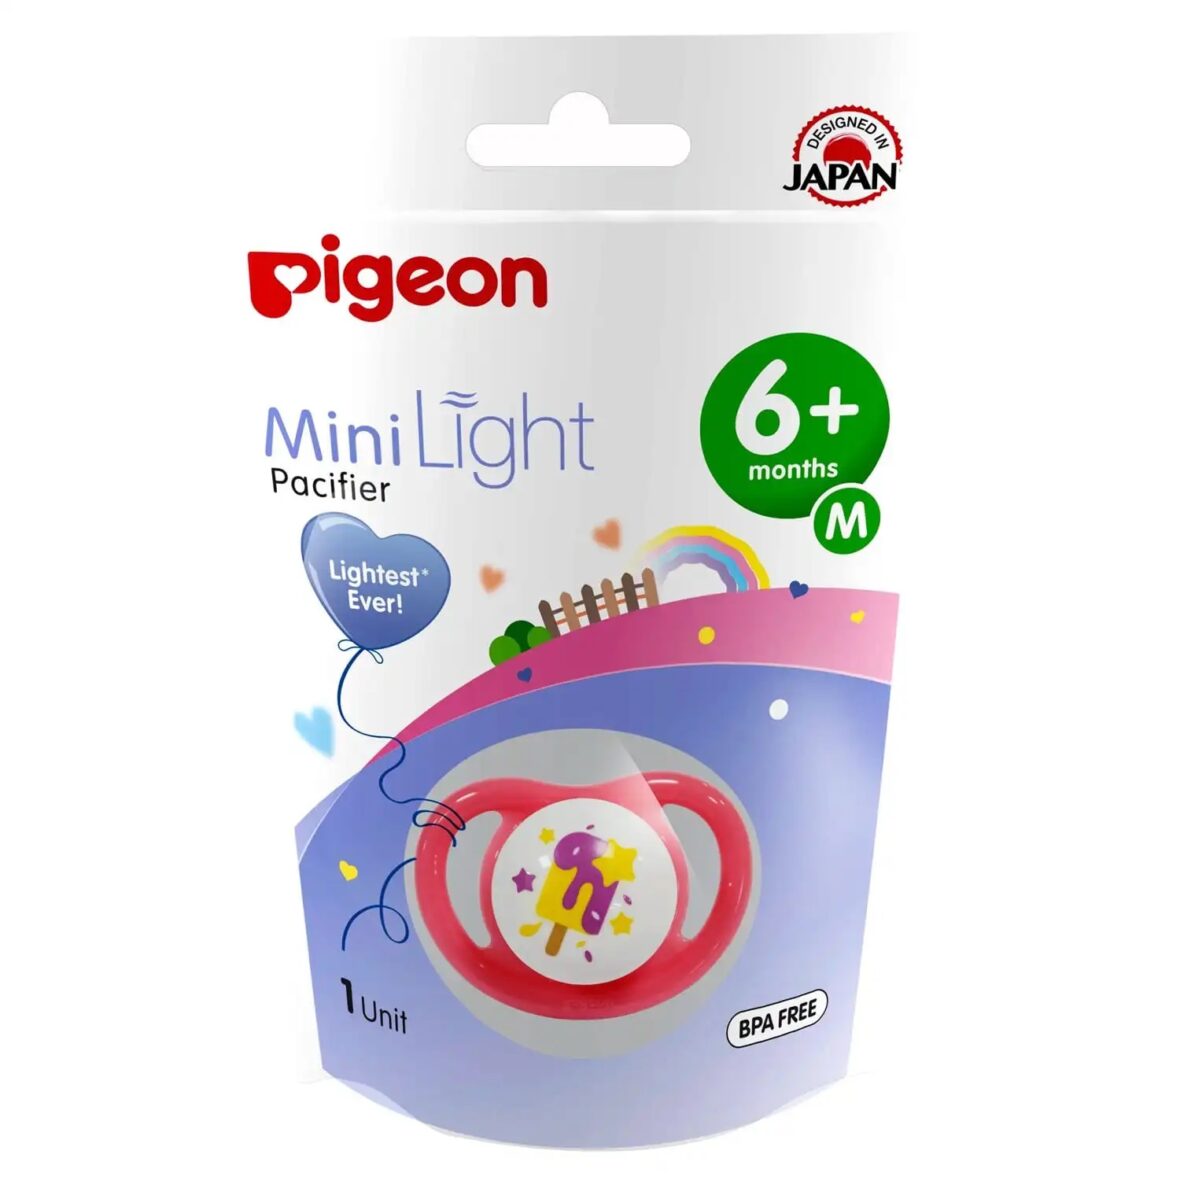 Pigeon Minilight Pacifier (M) Girl – Ice Cream-N78239.3